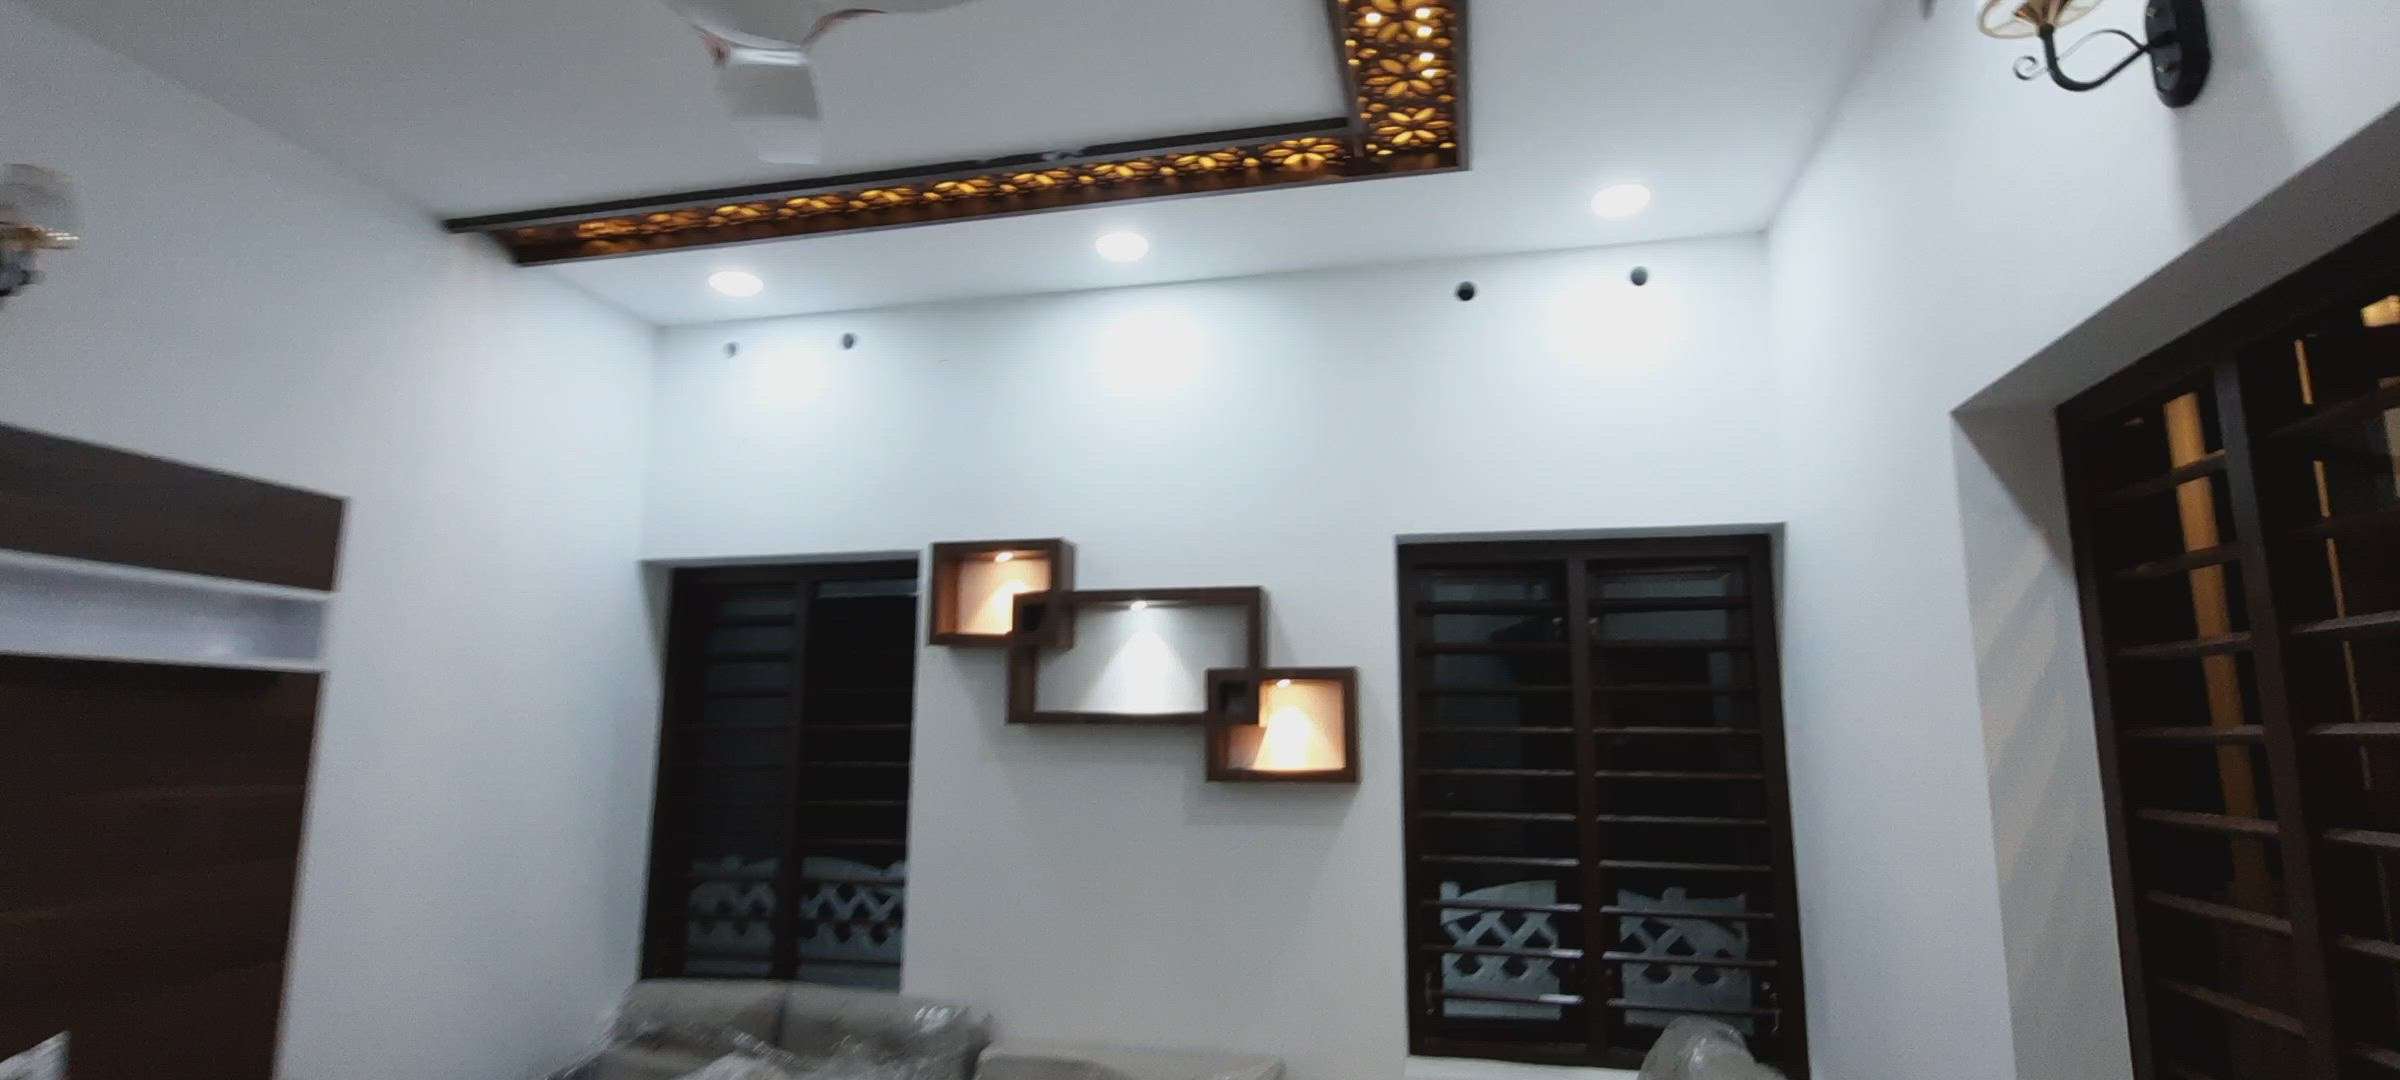 Living, Furniture, Ceiling, Staircase, Kitchen, Bathroom, Prayer Room Designs by Carpenter roshan ks, Thrissur | Kolo